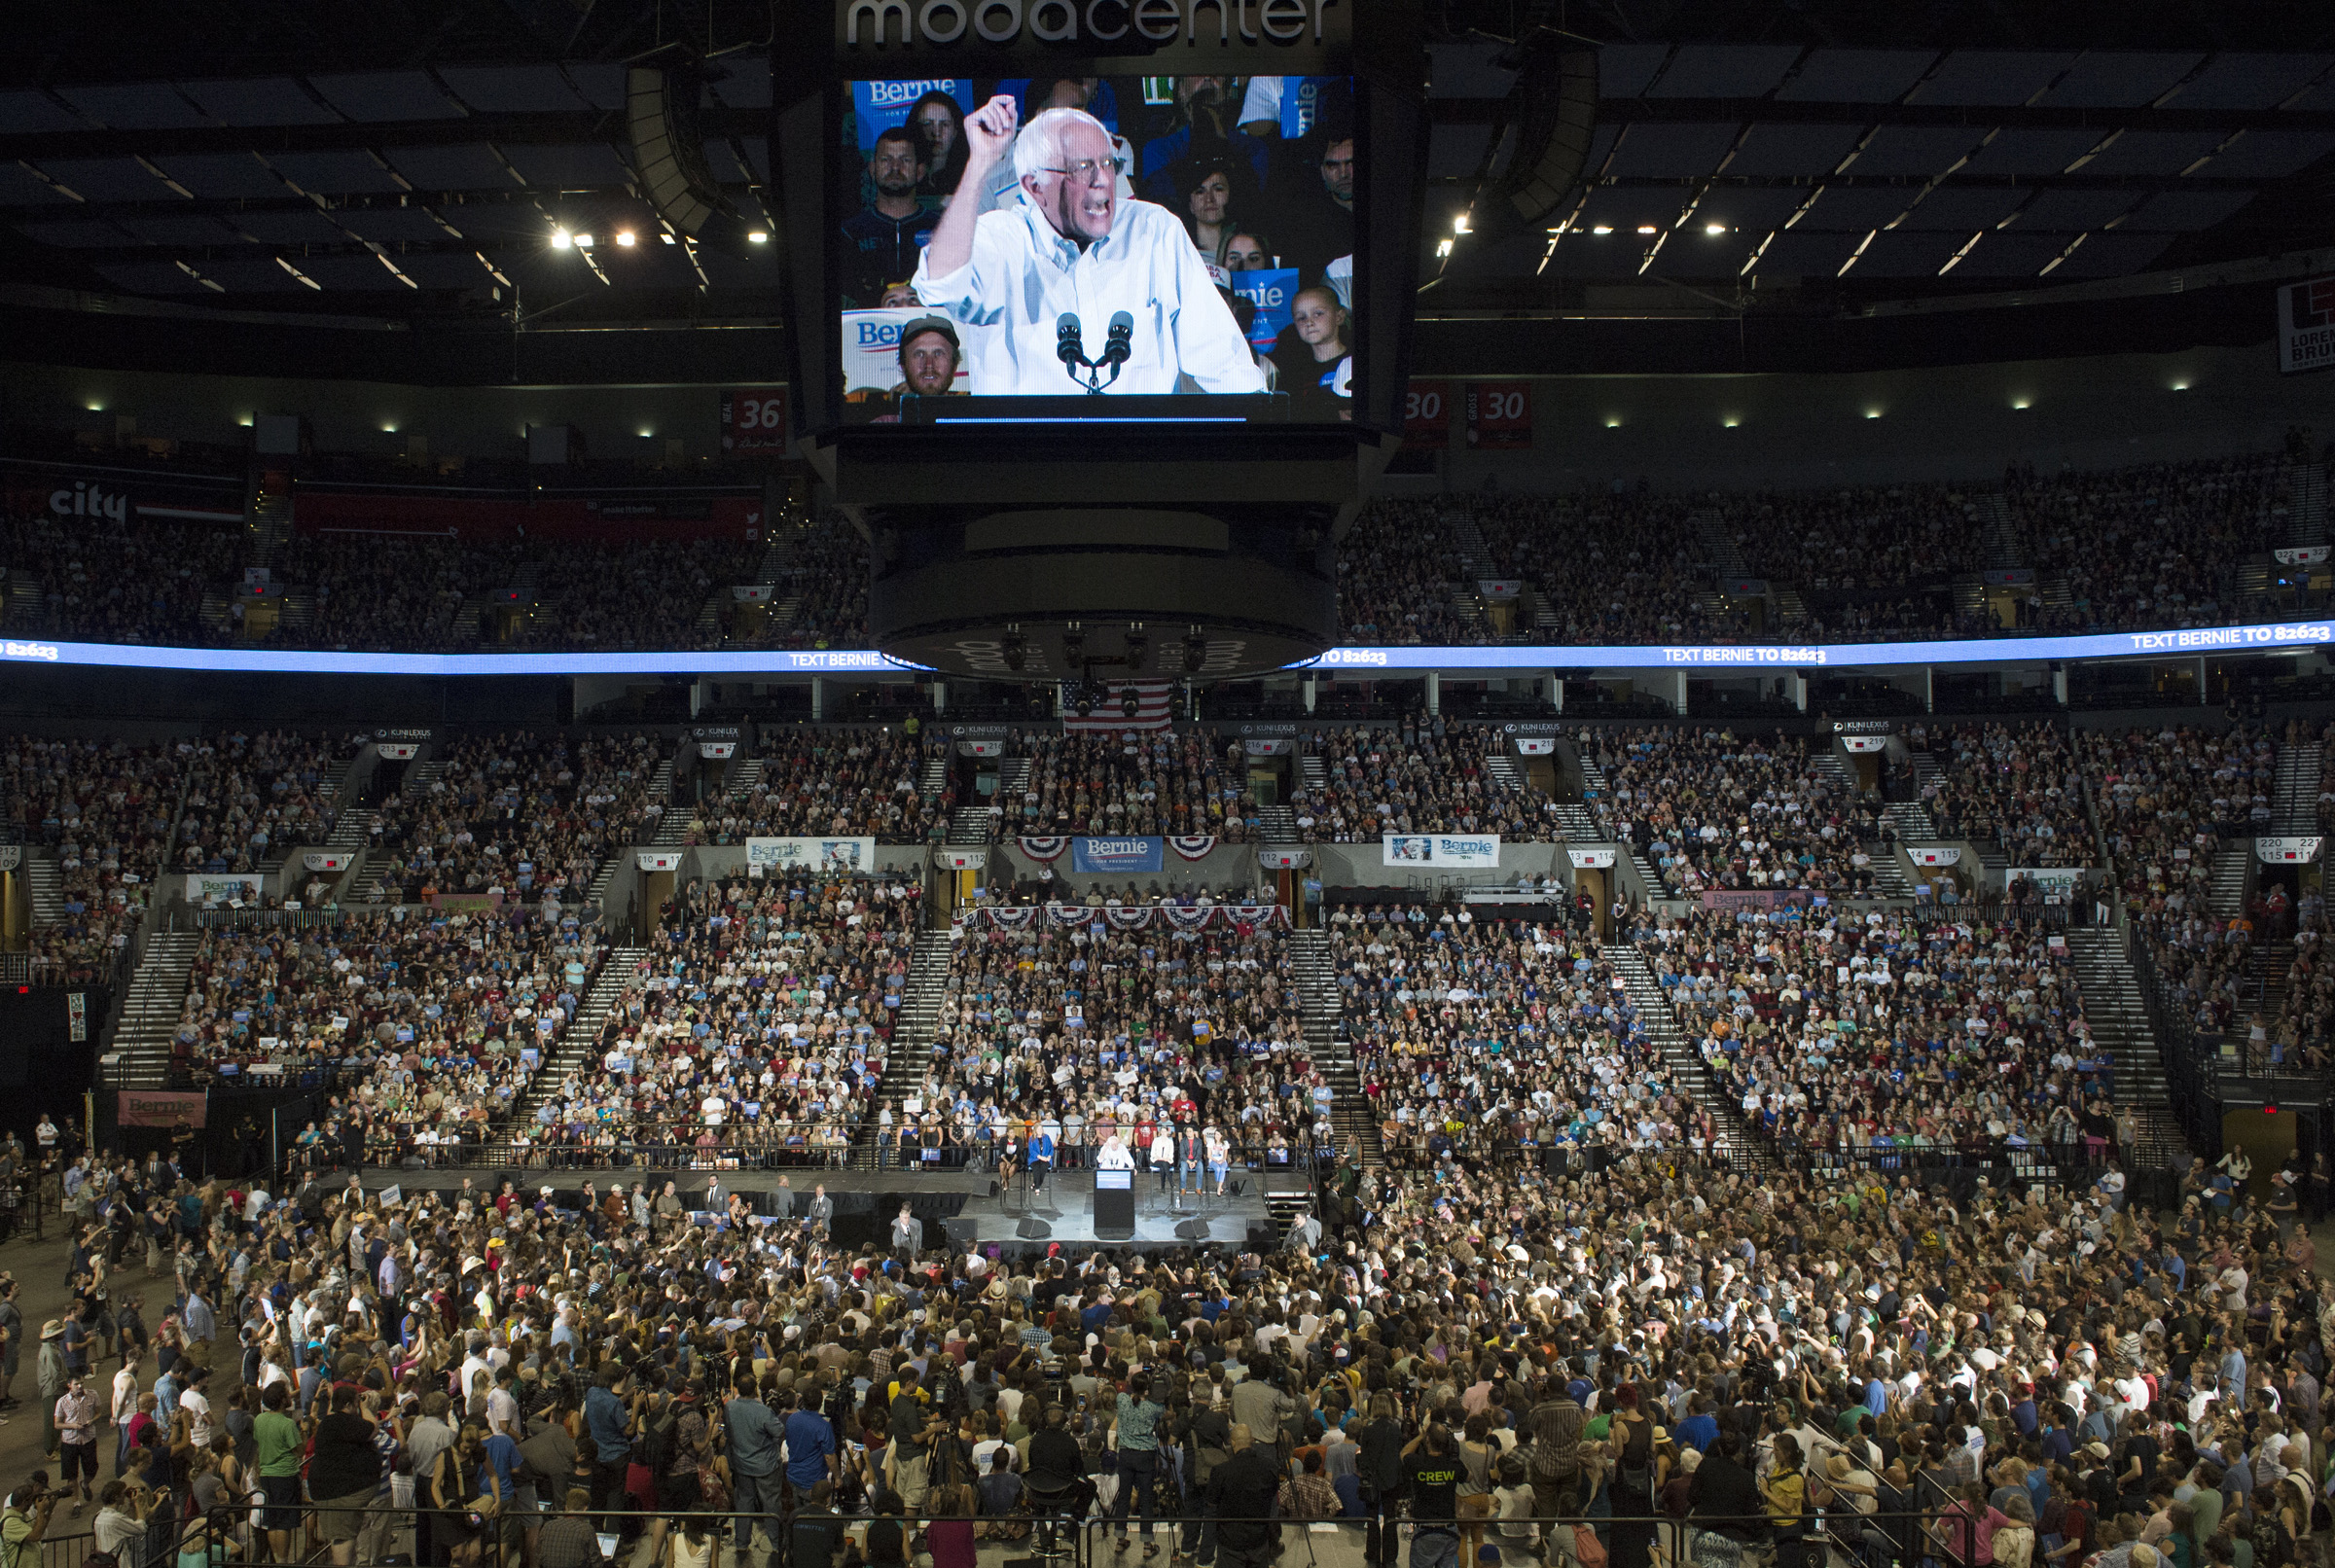 Bernie Sanders draws 28,000 in Portland rally - CBS News